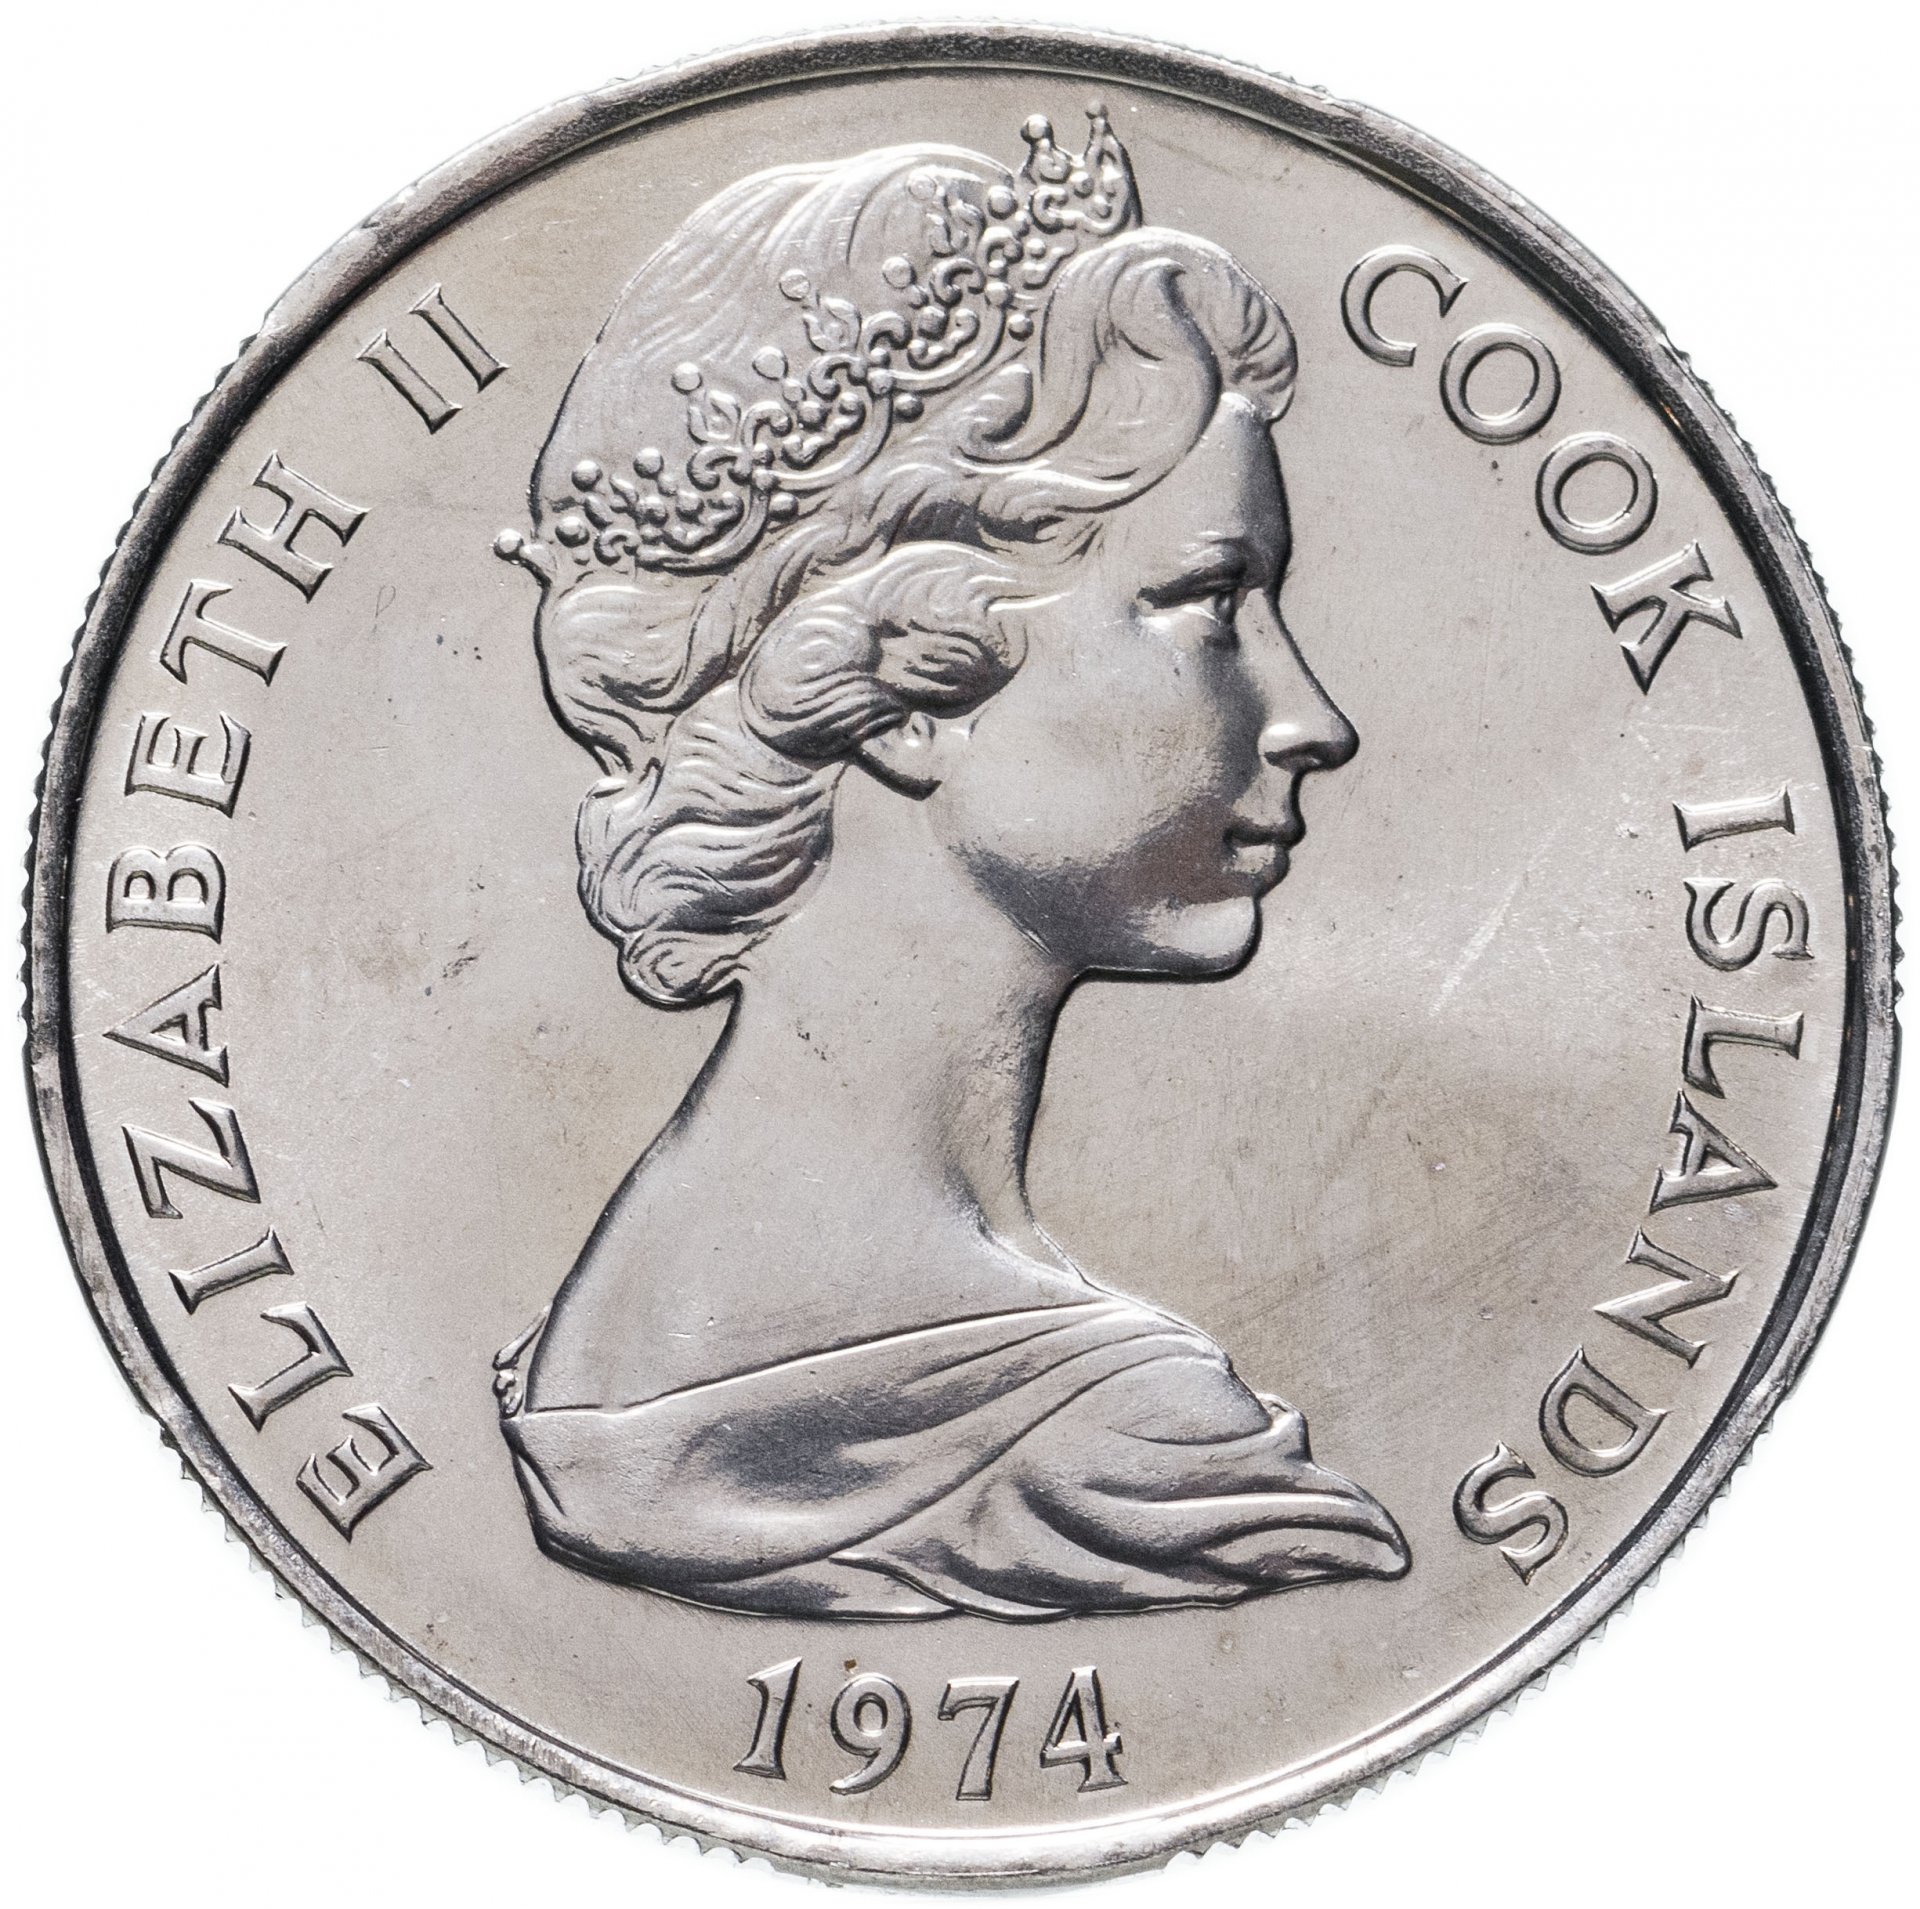 1 доллар кука. 1 Доллар острова Кука. Монета 1 доллар 1969 новая Зеландия. Монеты новой Зеландии.